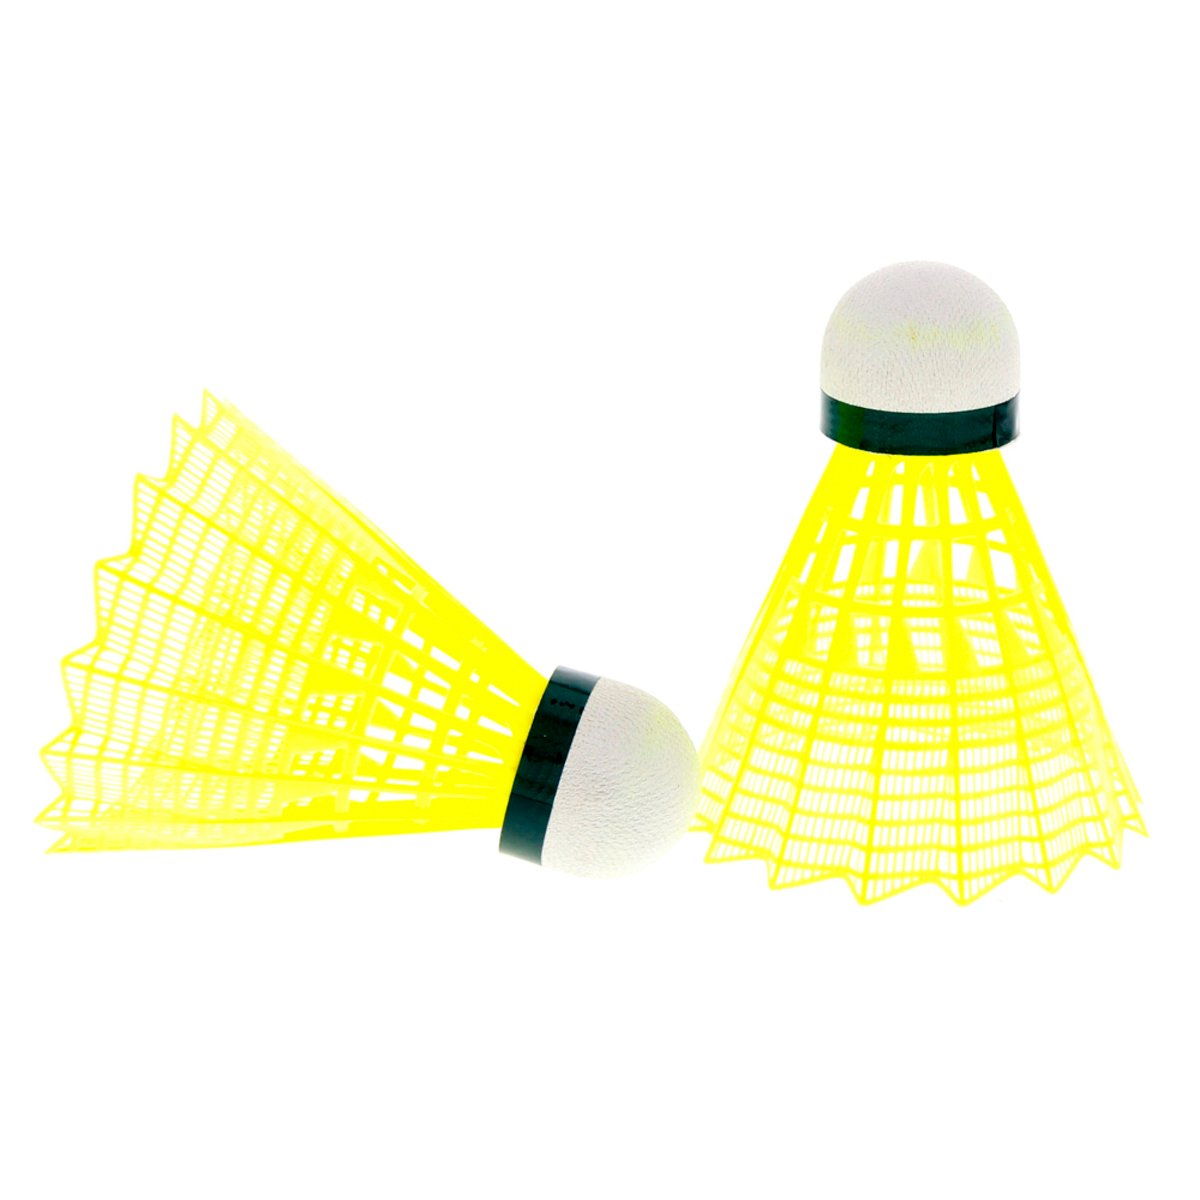 Li-Ning Badminton Shuttle MARKX800